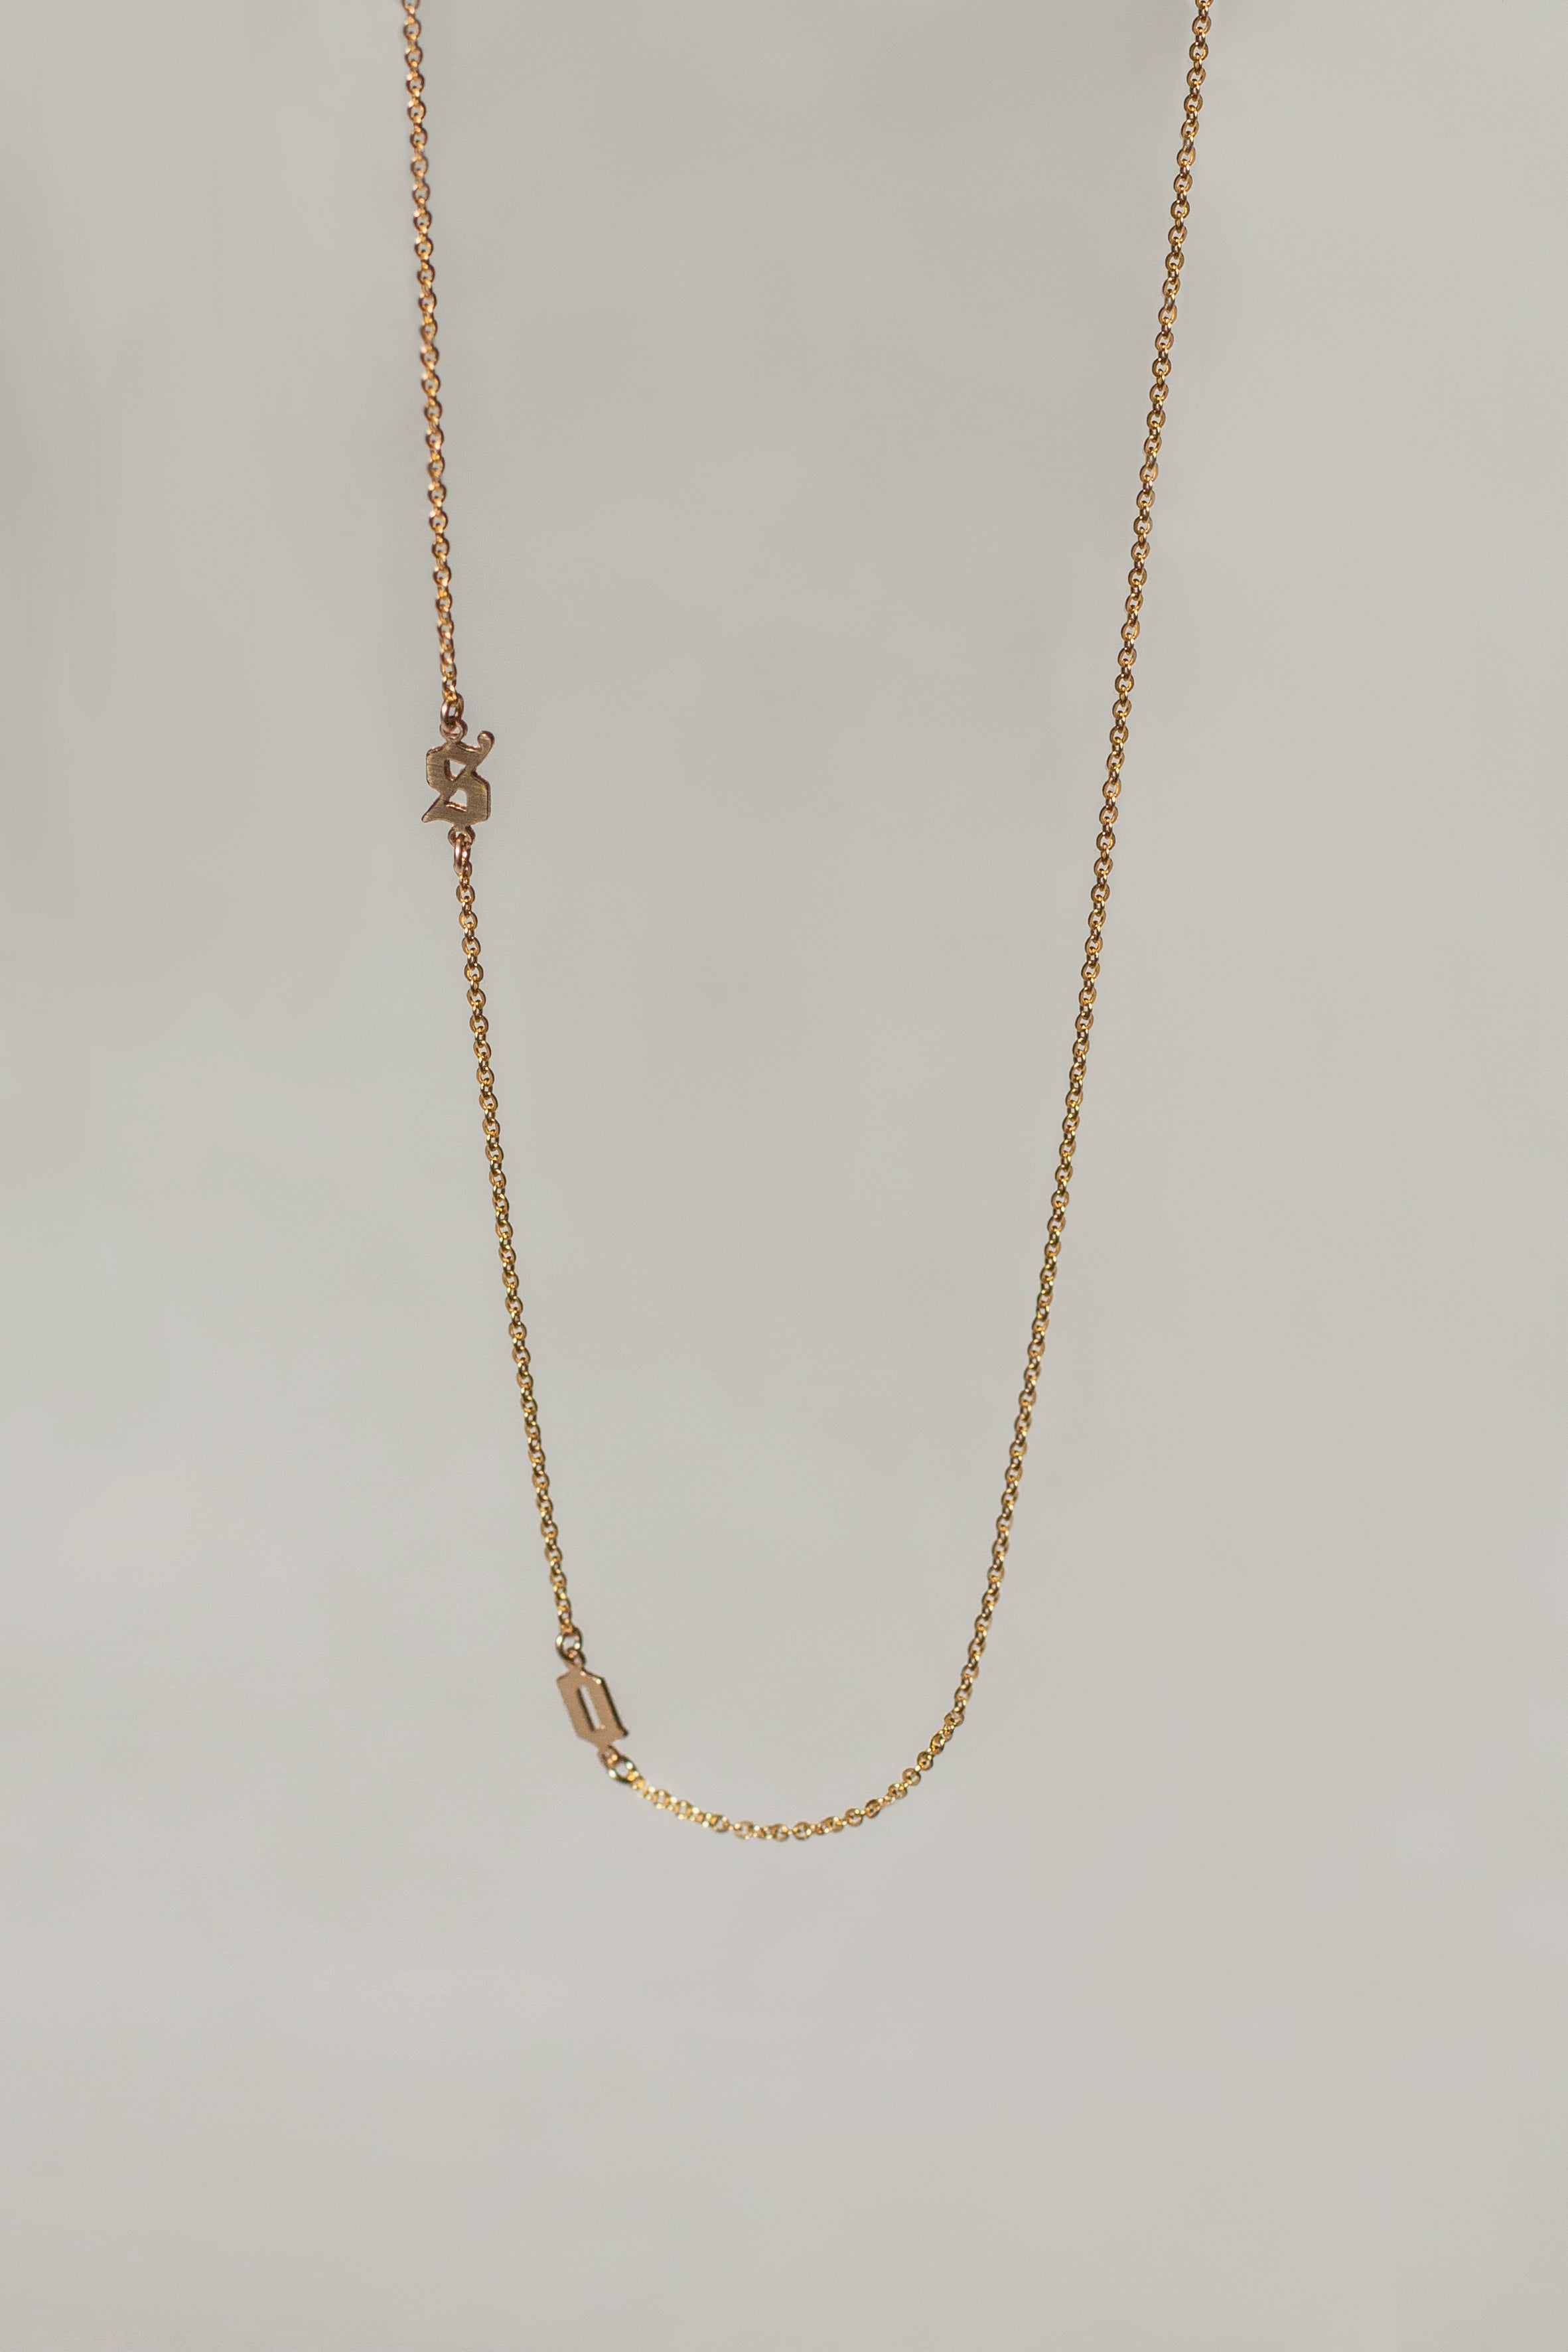 Olivia necklace